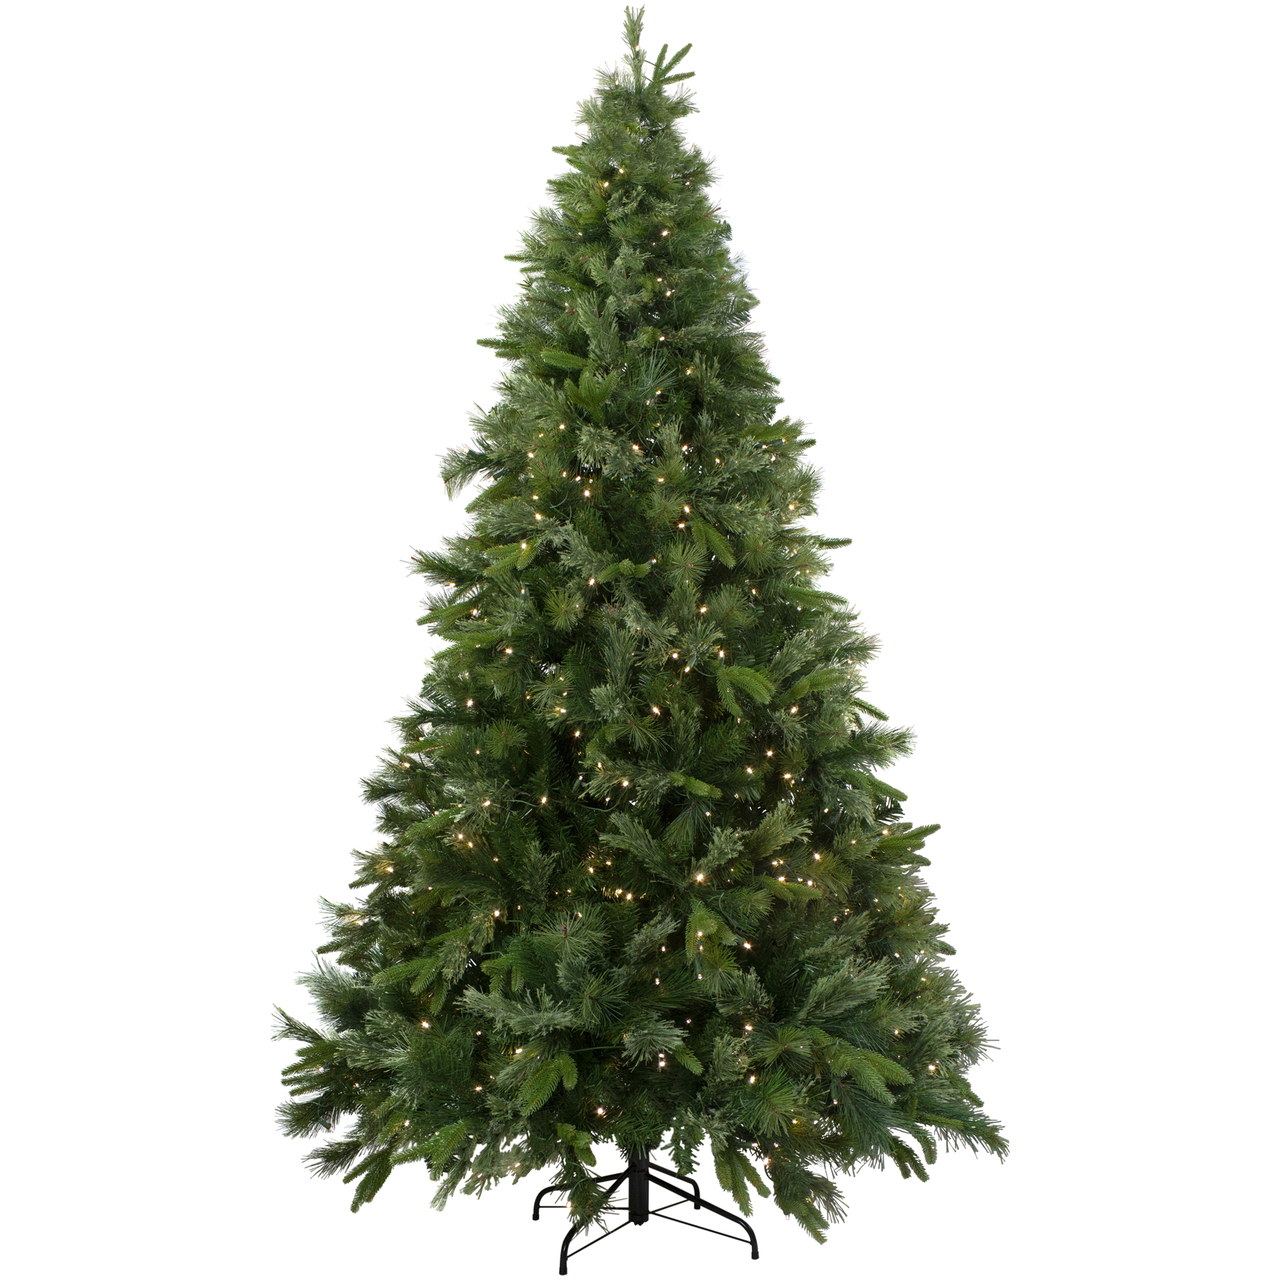 Realistic Christmas Trees